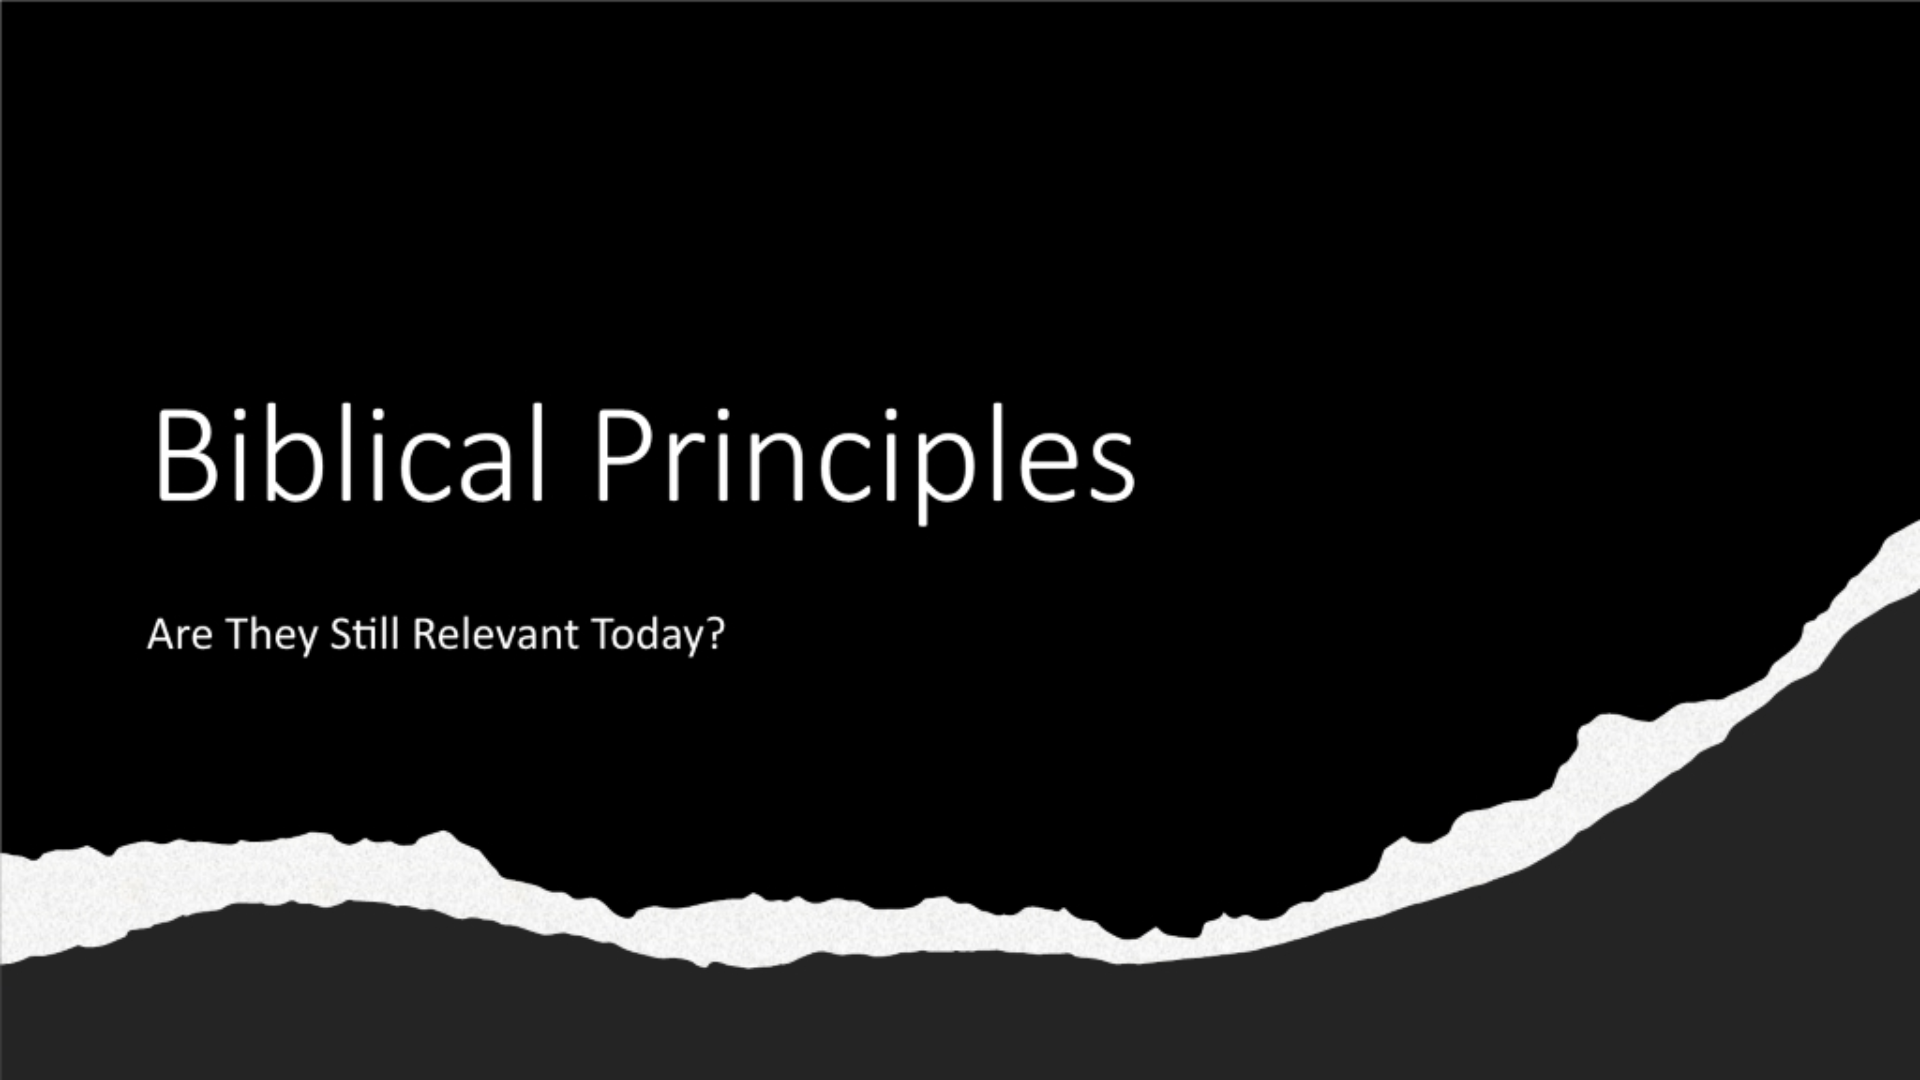 Biblical Principles